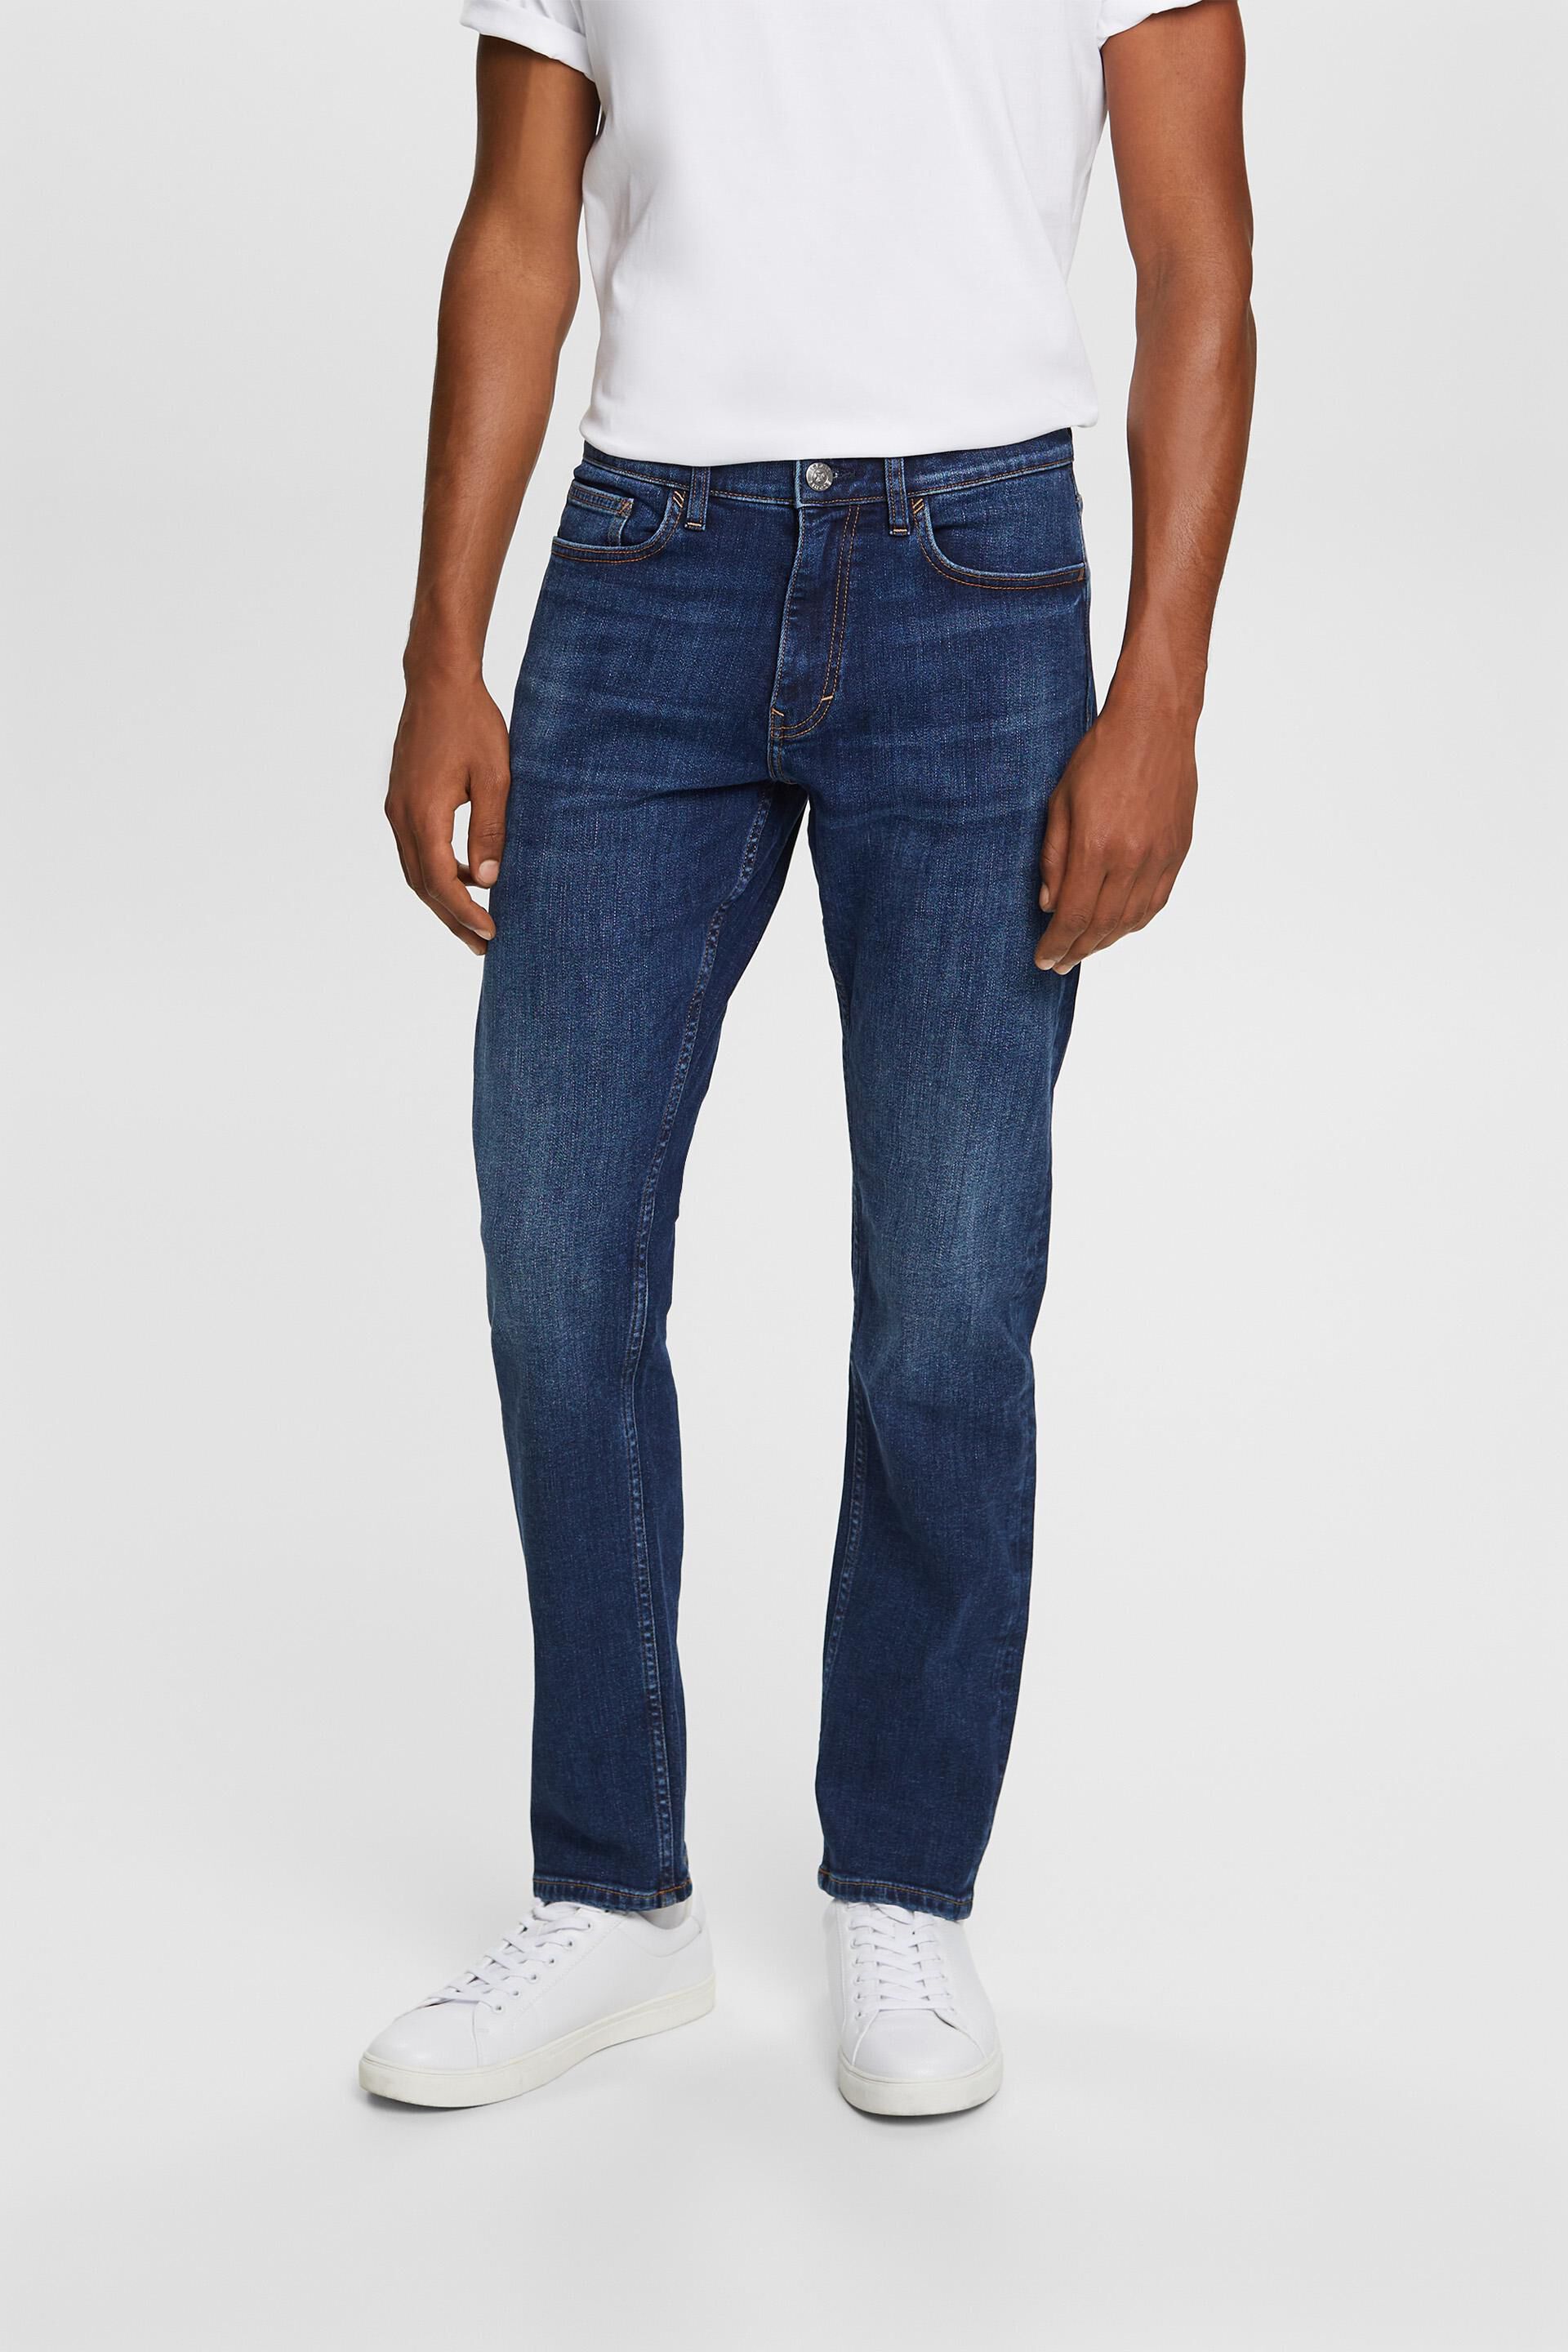 Esprit jeans stretch fit Slim